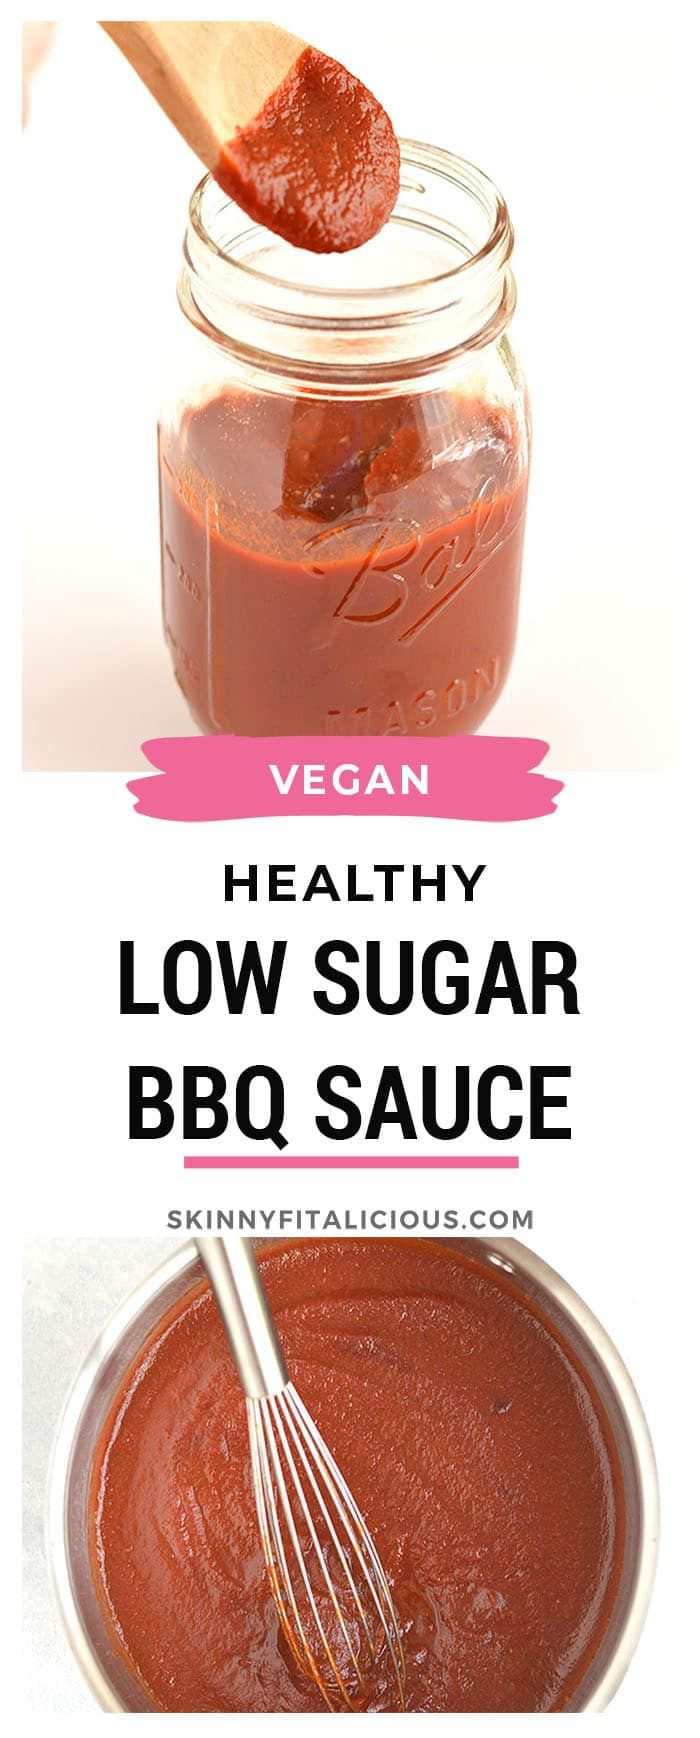 Low Calorie Bbq Sauce Recipe
 Low Sugar BBQ Sauce homemade in under 30 minutes vegan